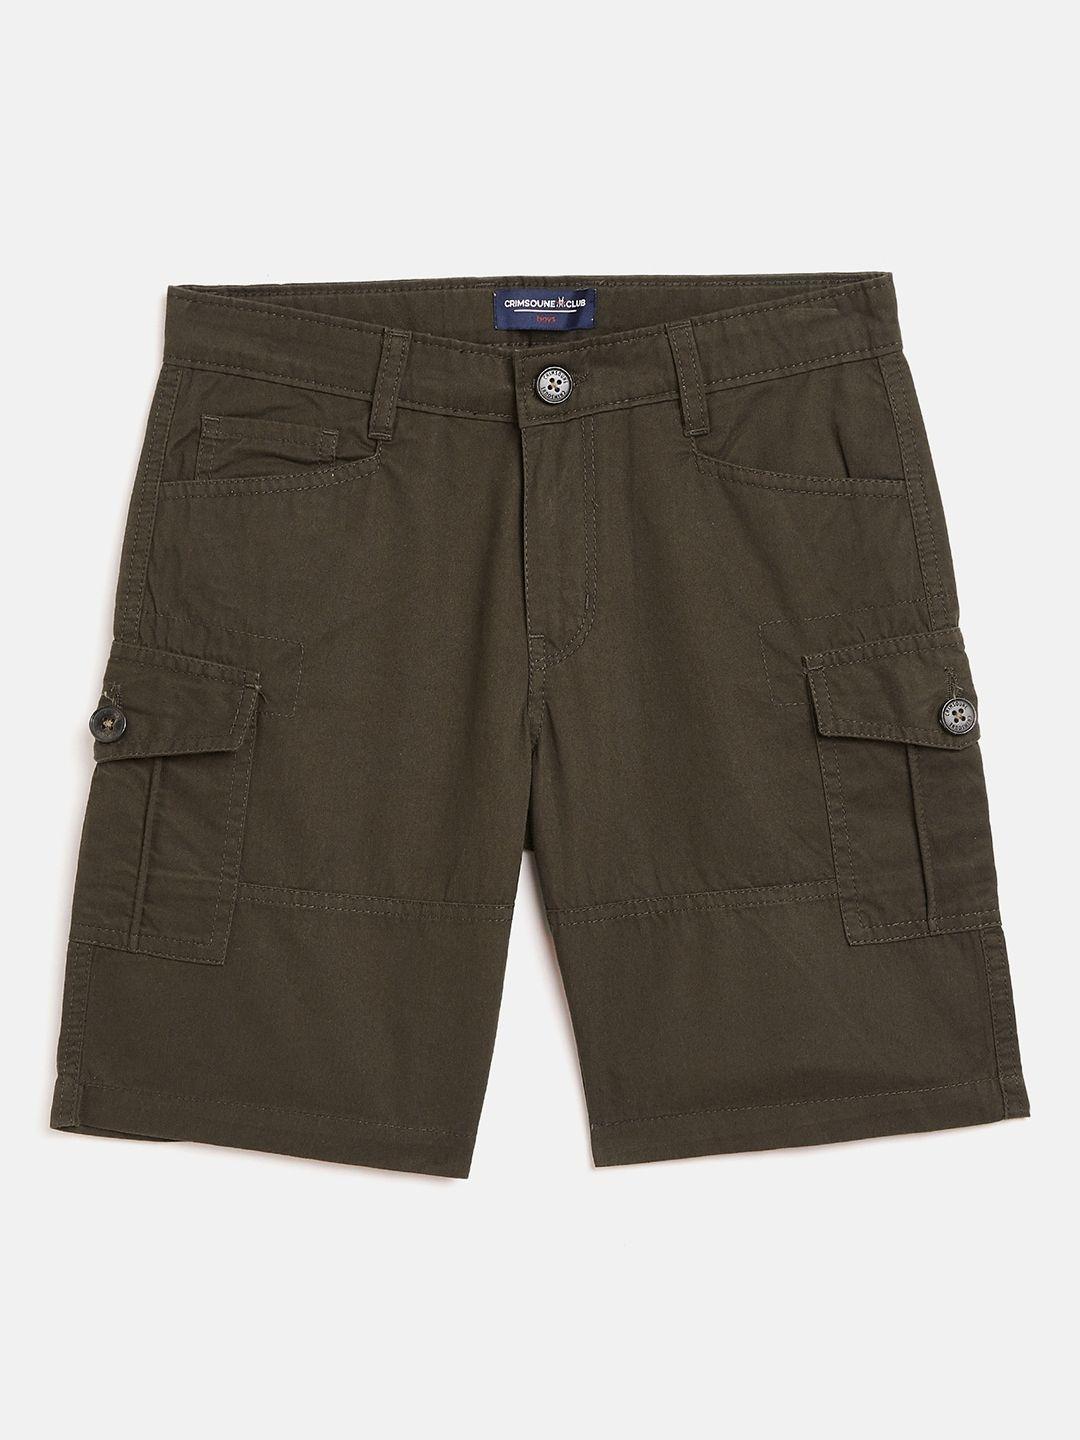 crimsoune club boys olive green solid slim fit cargo shorts